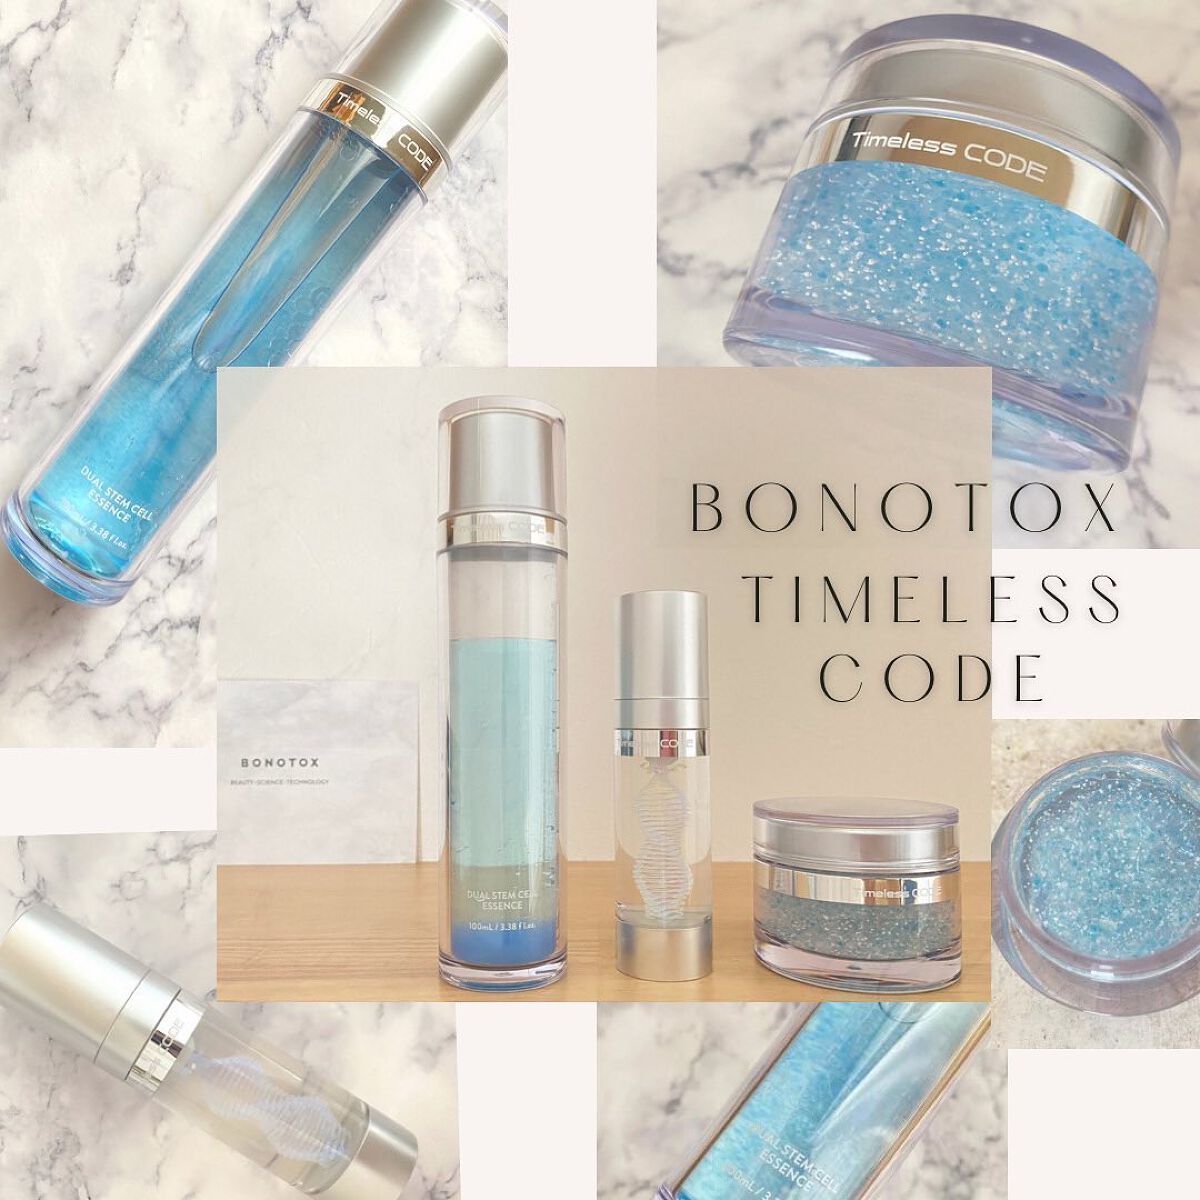 Bonotox-Timeless Code- 美容液